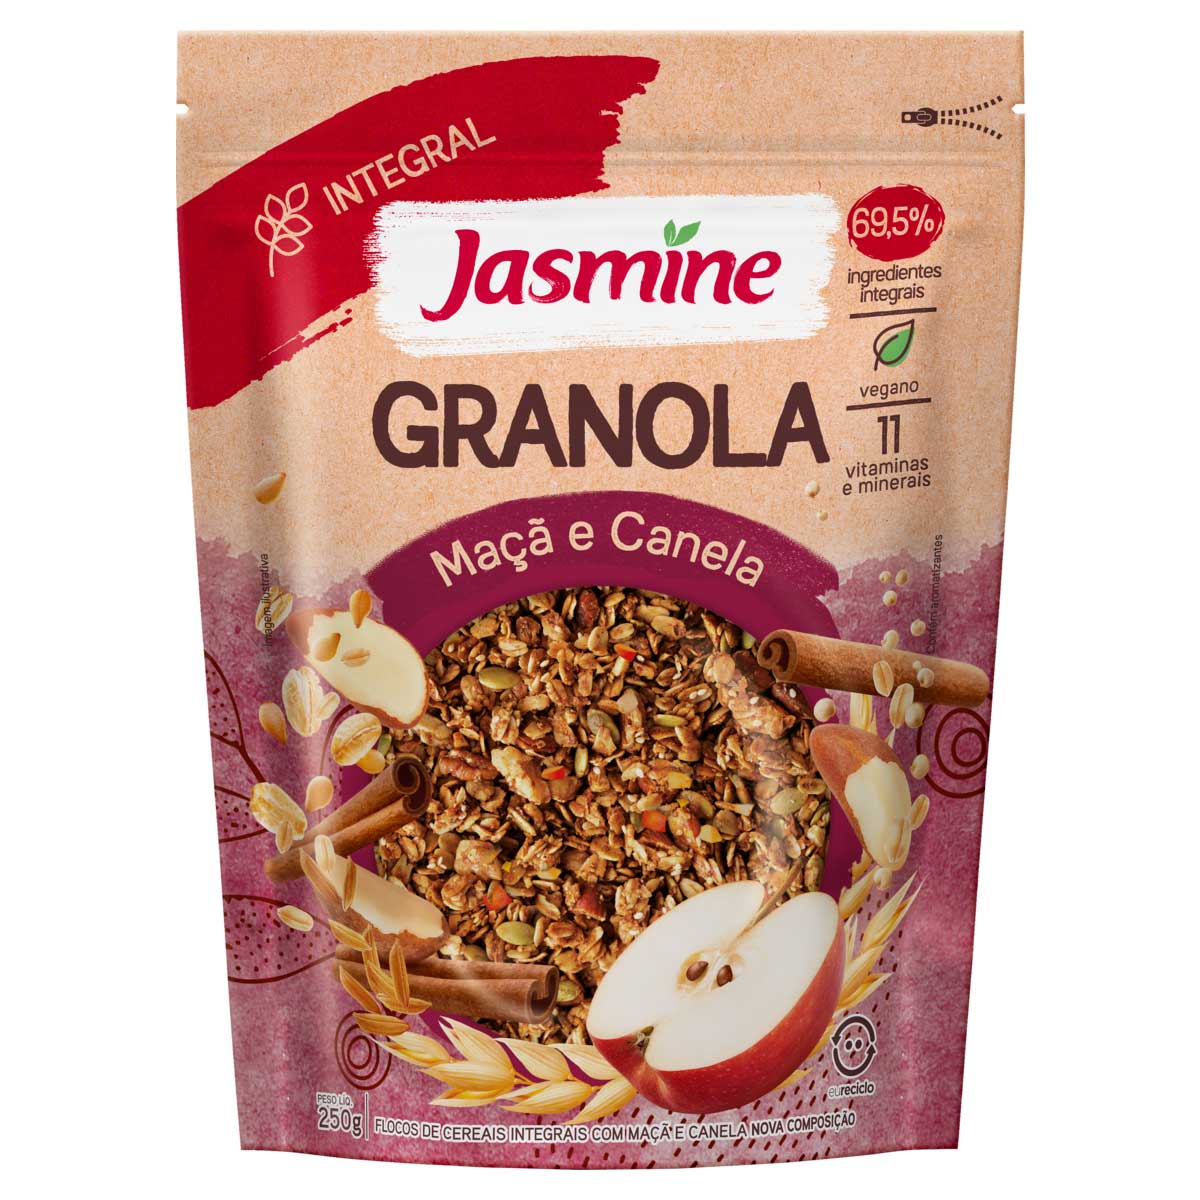 granola-integral-grain-flakes-jasmine-maca-e-canela-300g-1.jpg